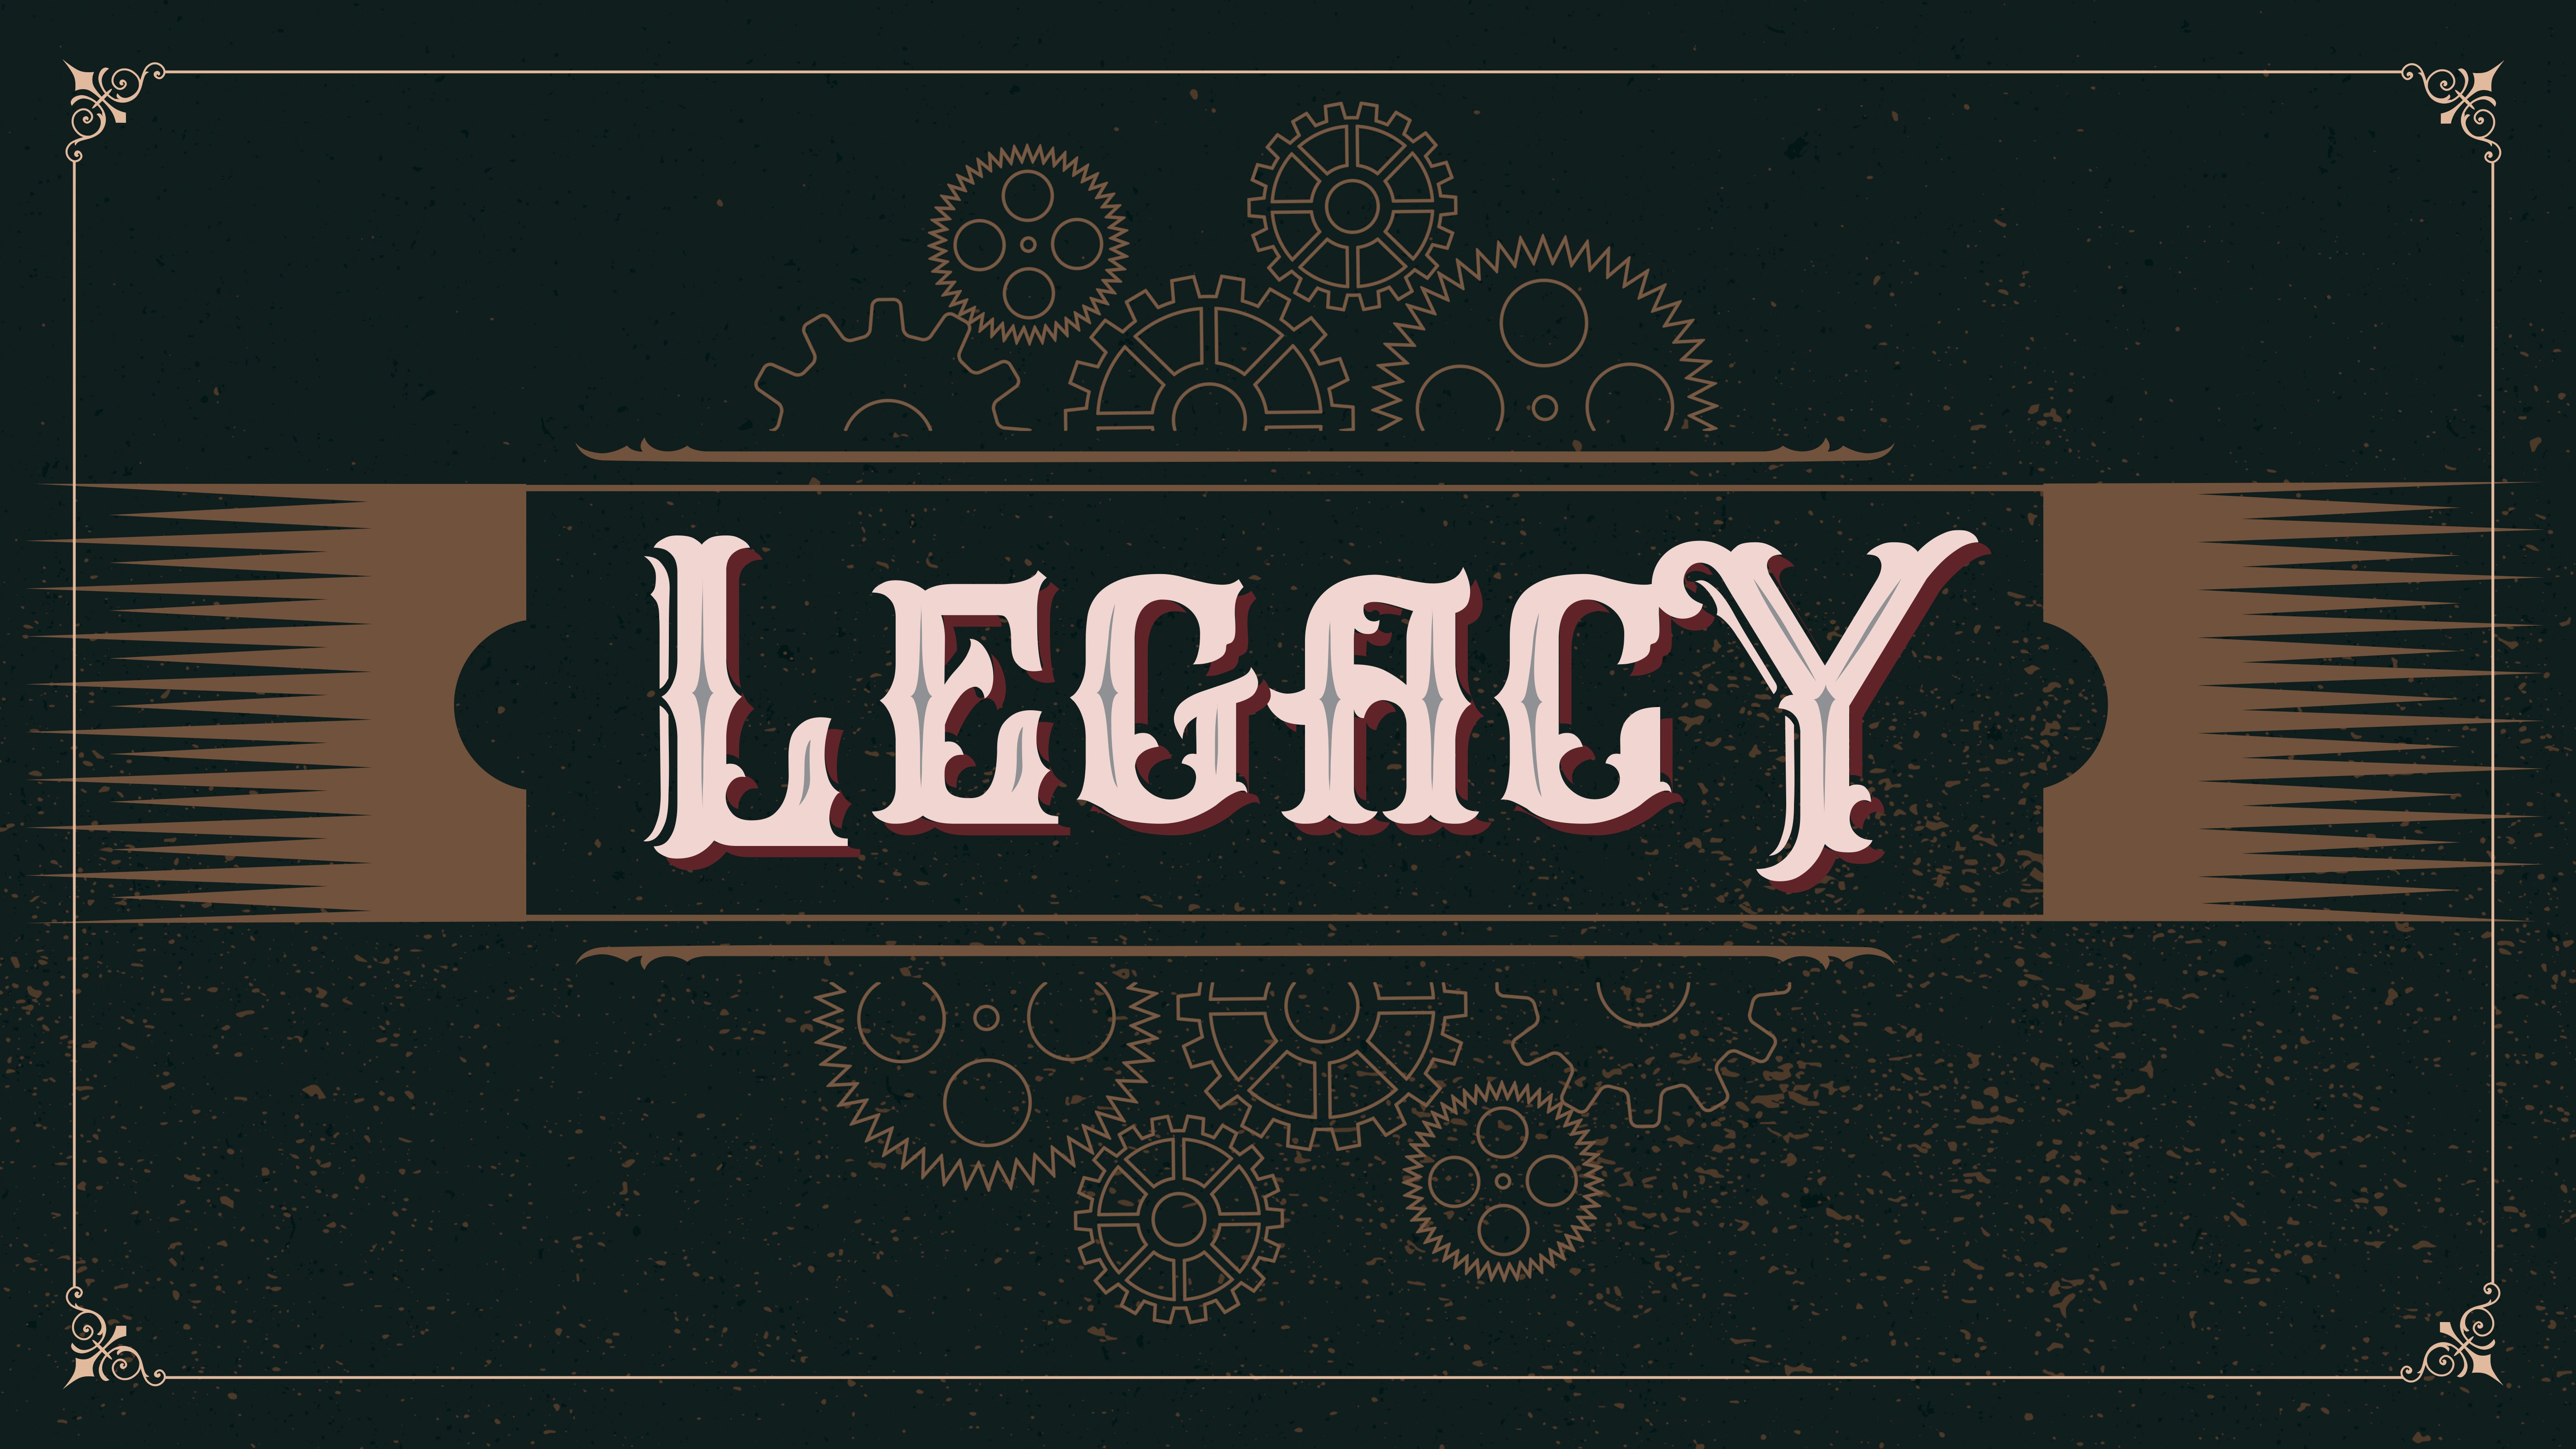 Legacy Memory Card Pack